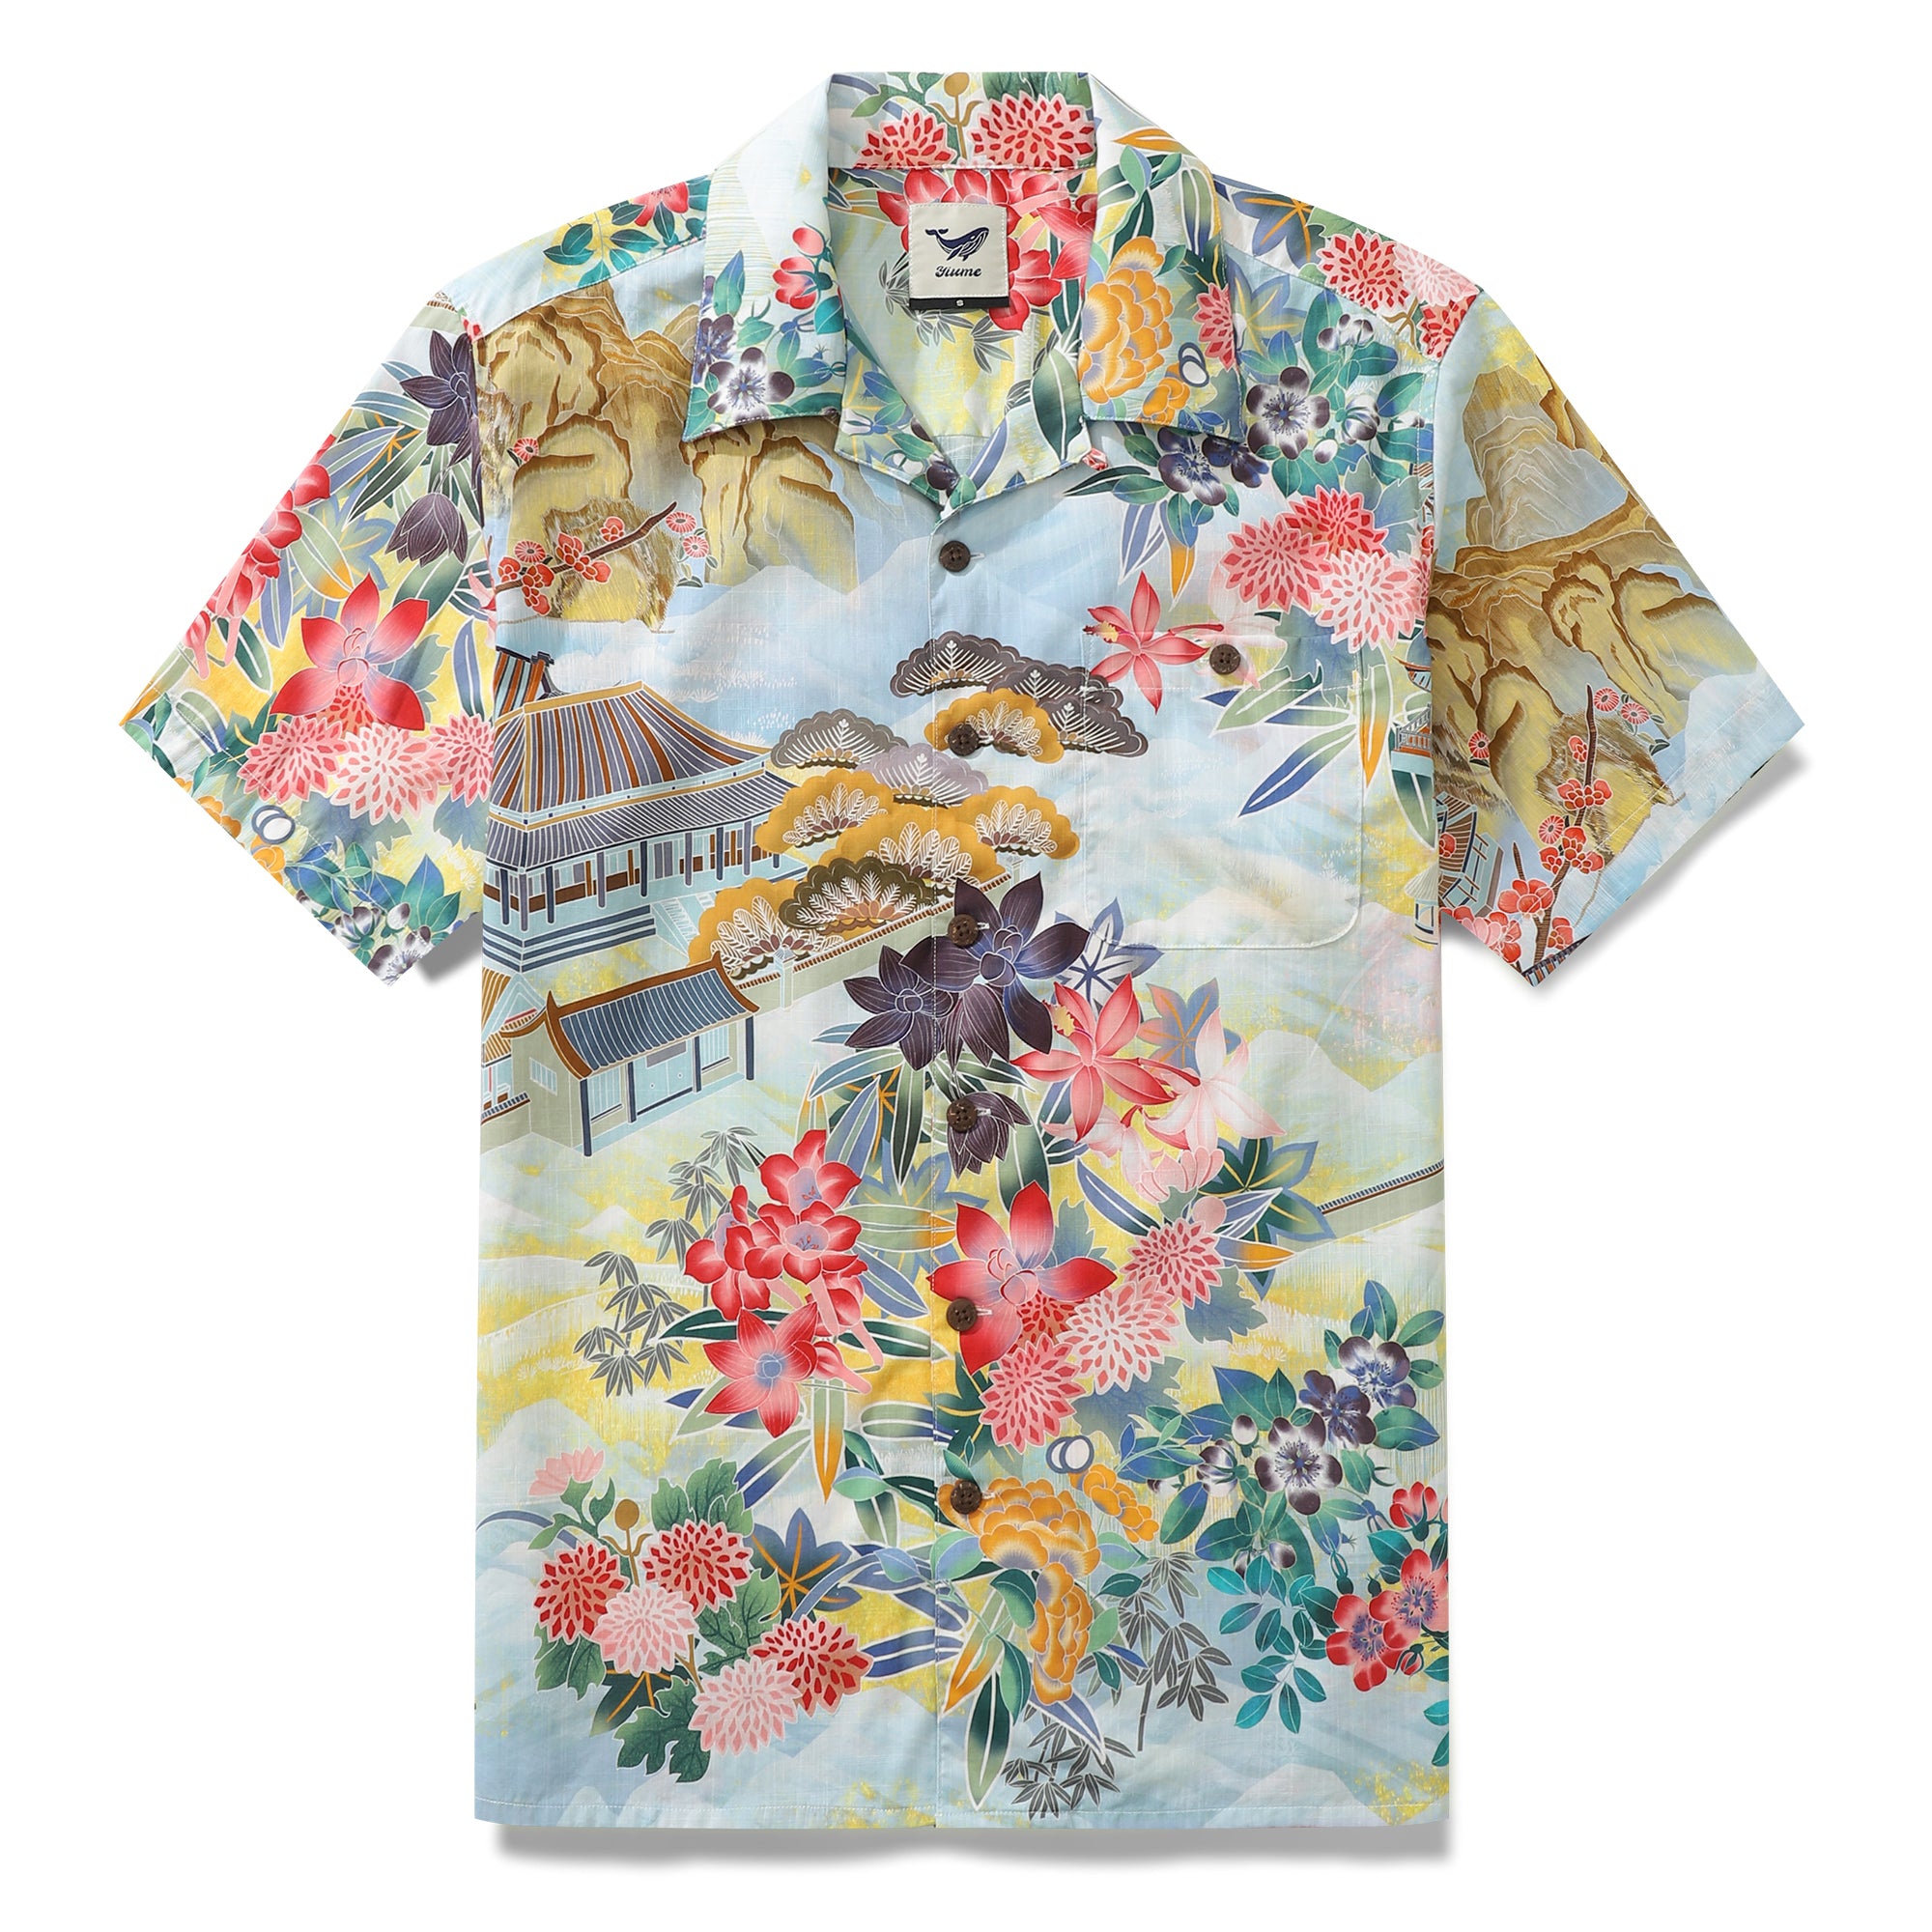 Men's Japanese Cotton Shirt 1950s Vintage Hawaiian Shirt For Men